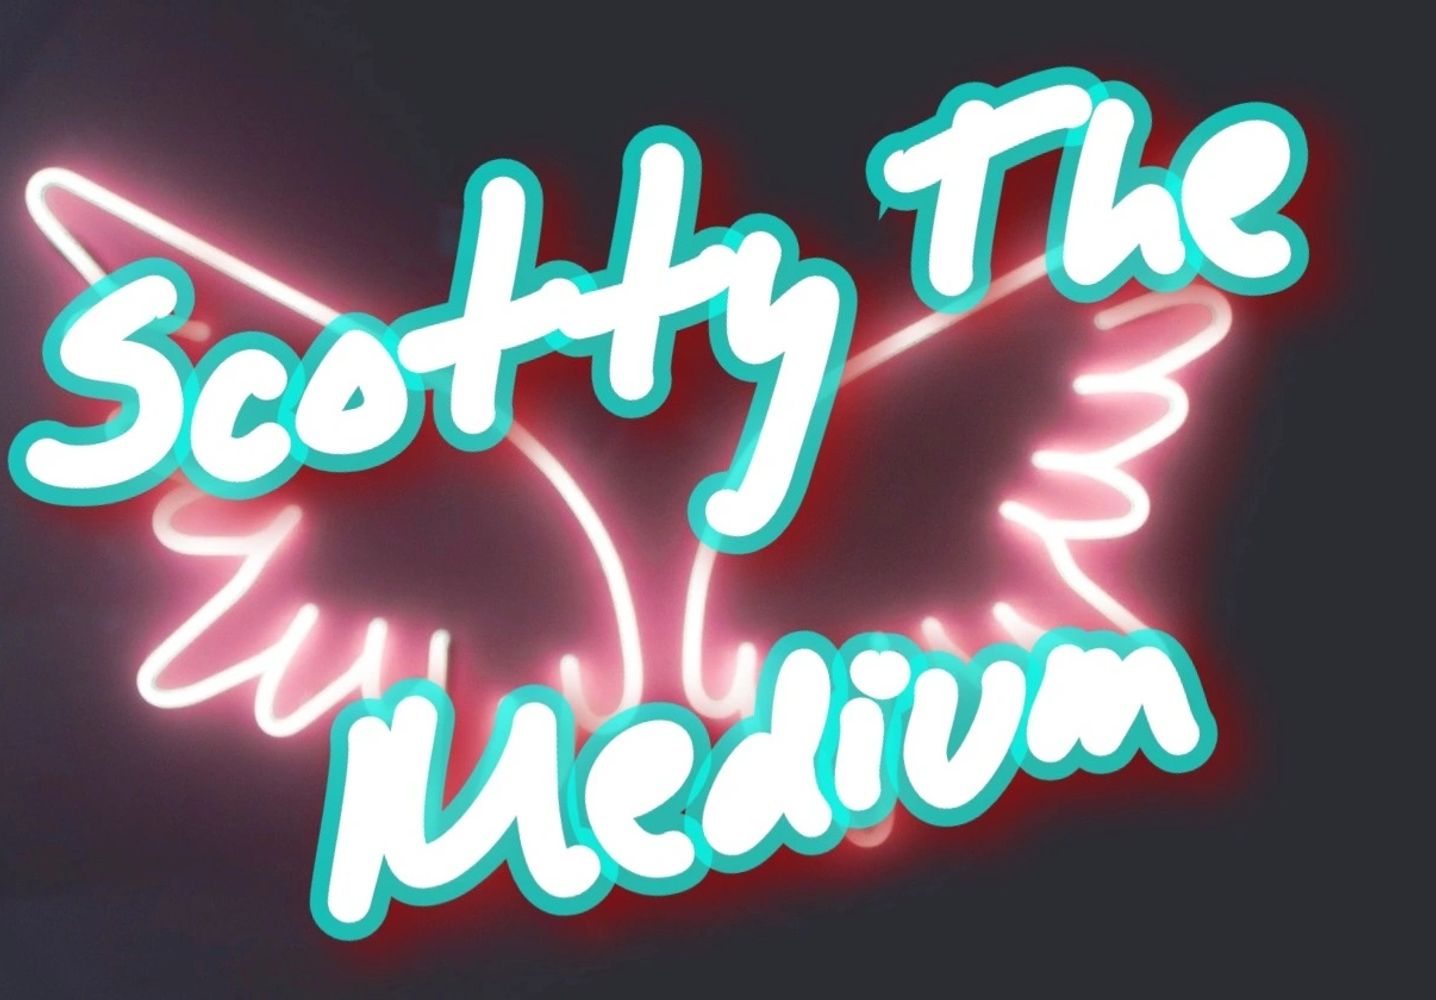 Scotty the Medium angel logo